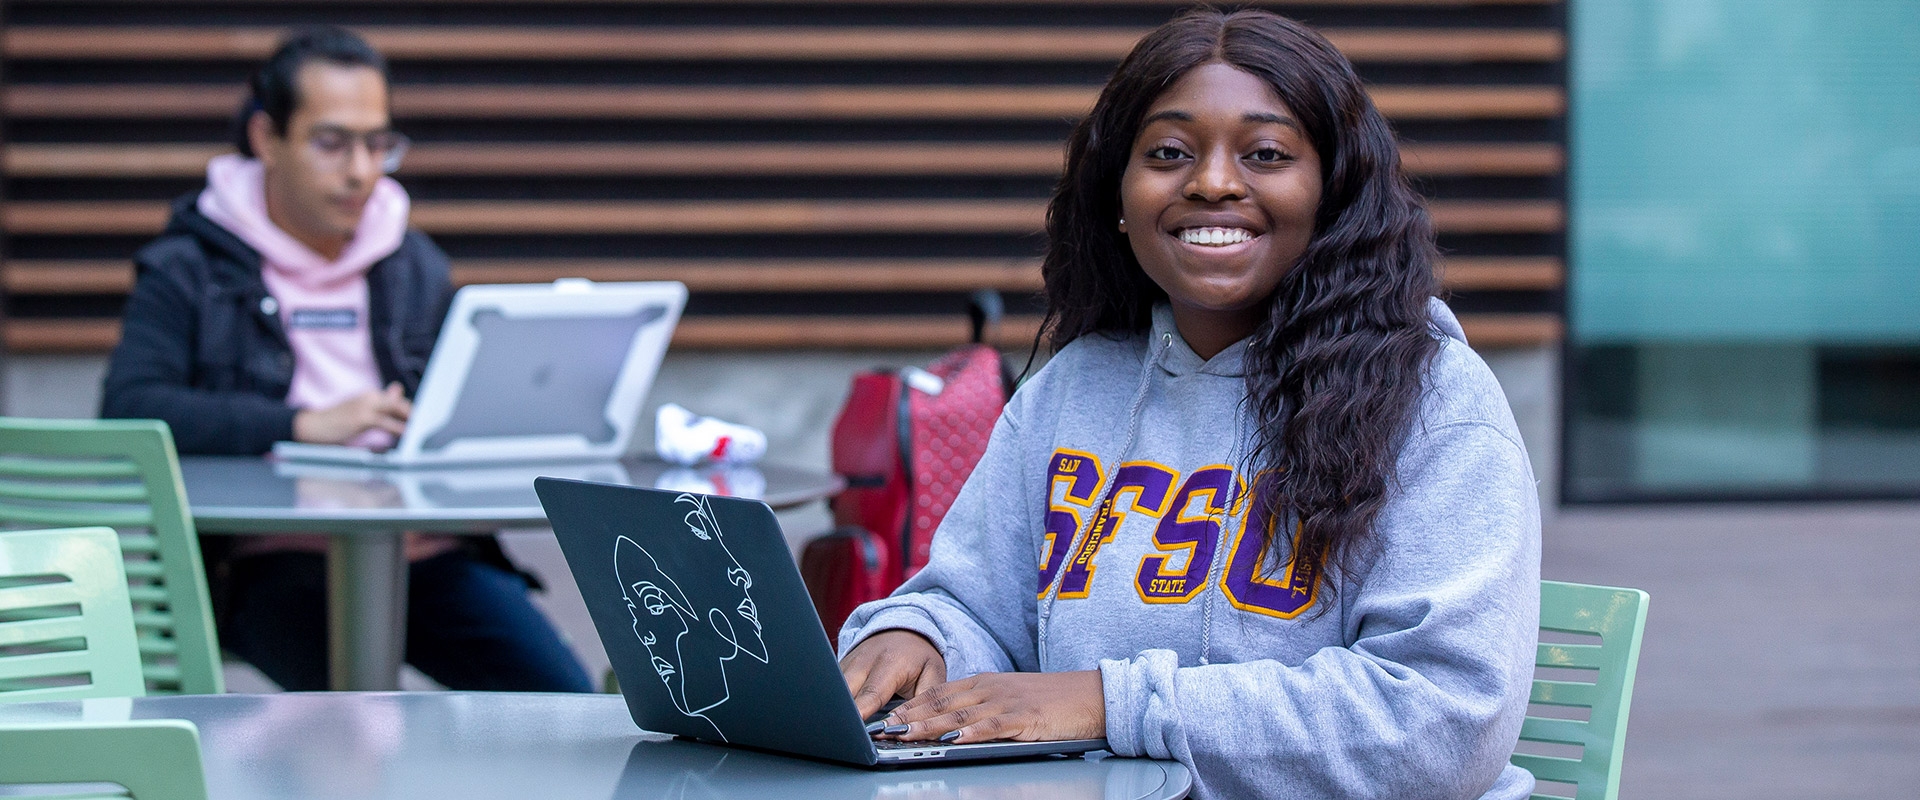 Woman in an SFSU sweatshirt taking a GE online course outdoors